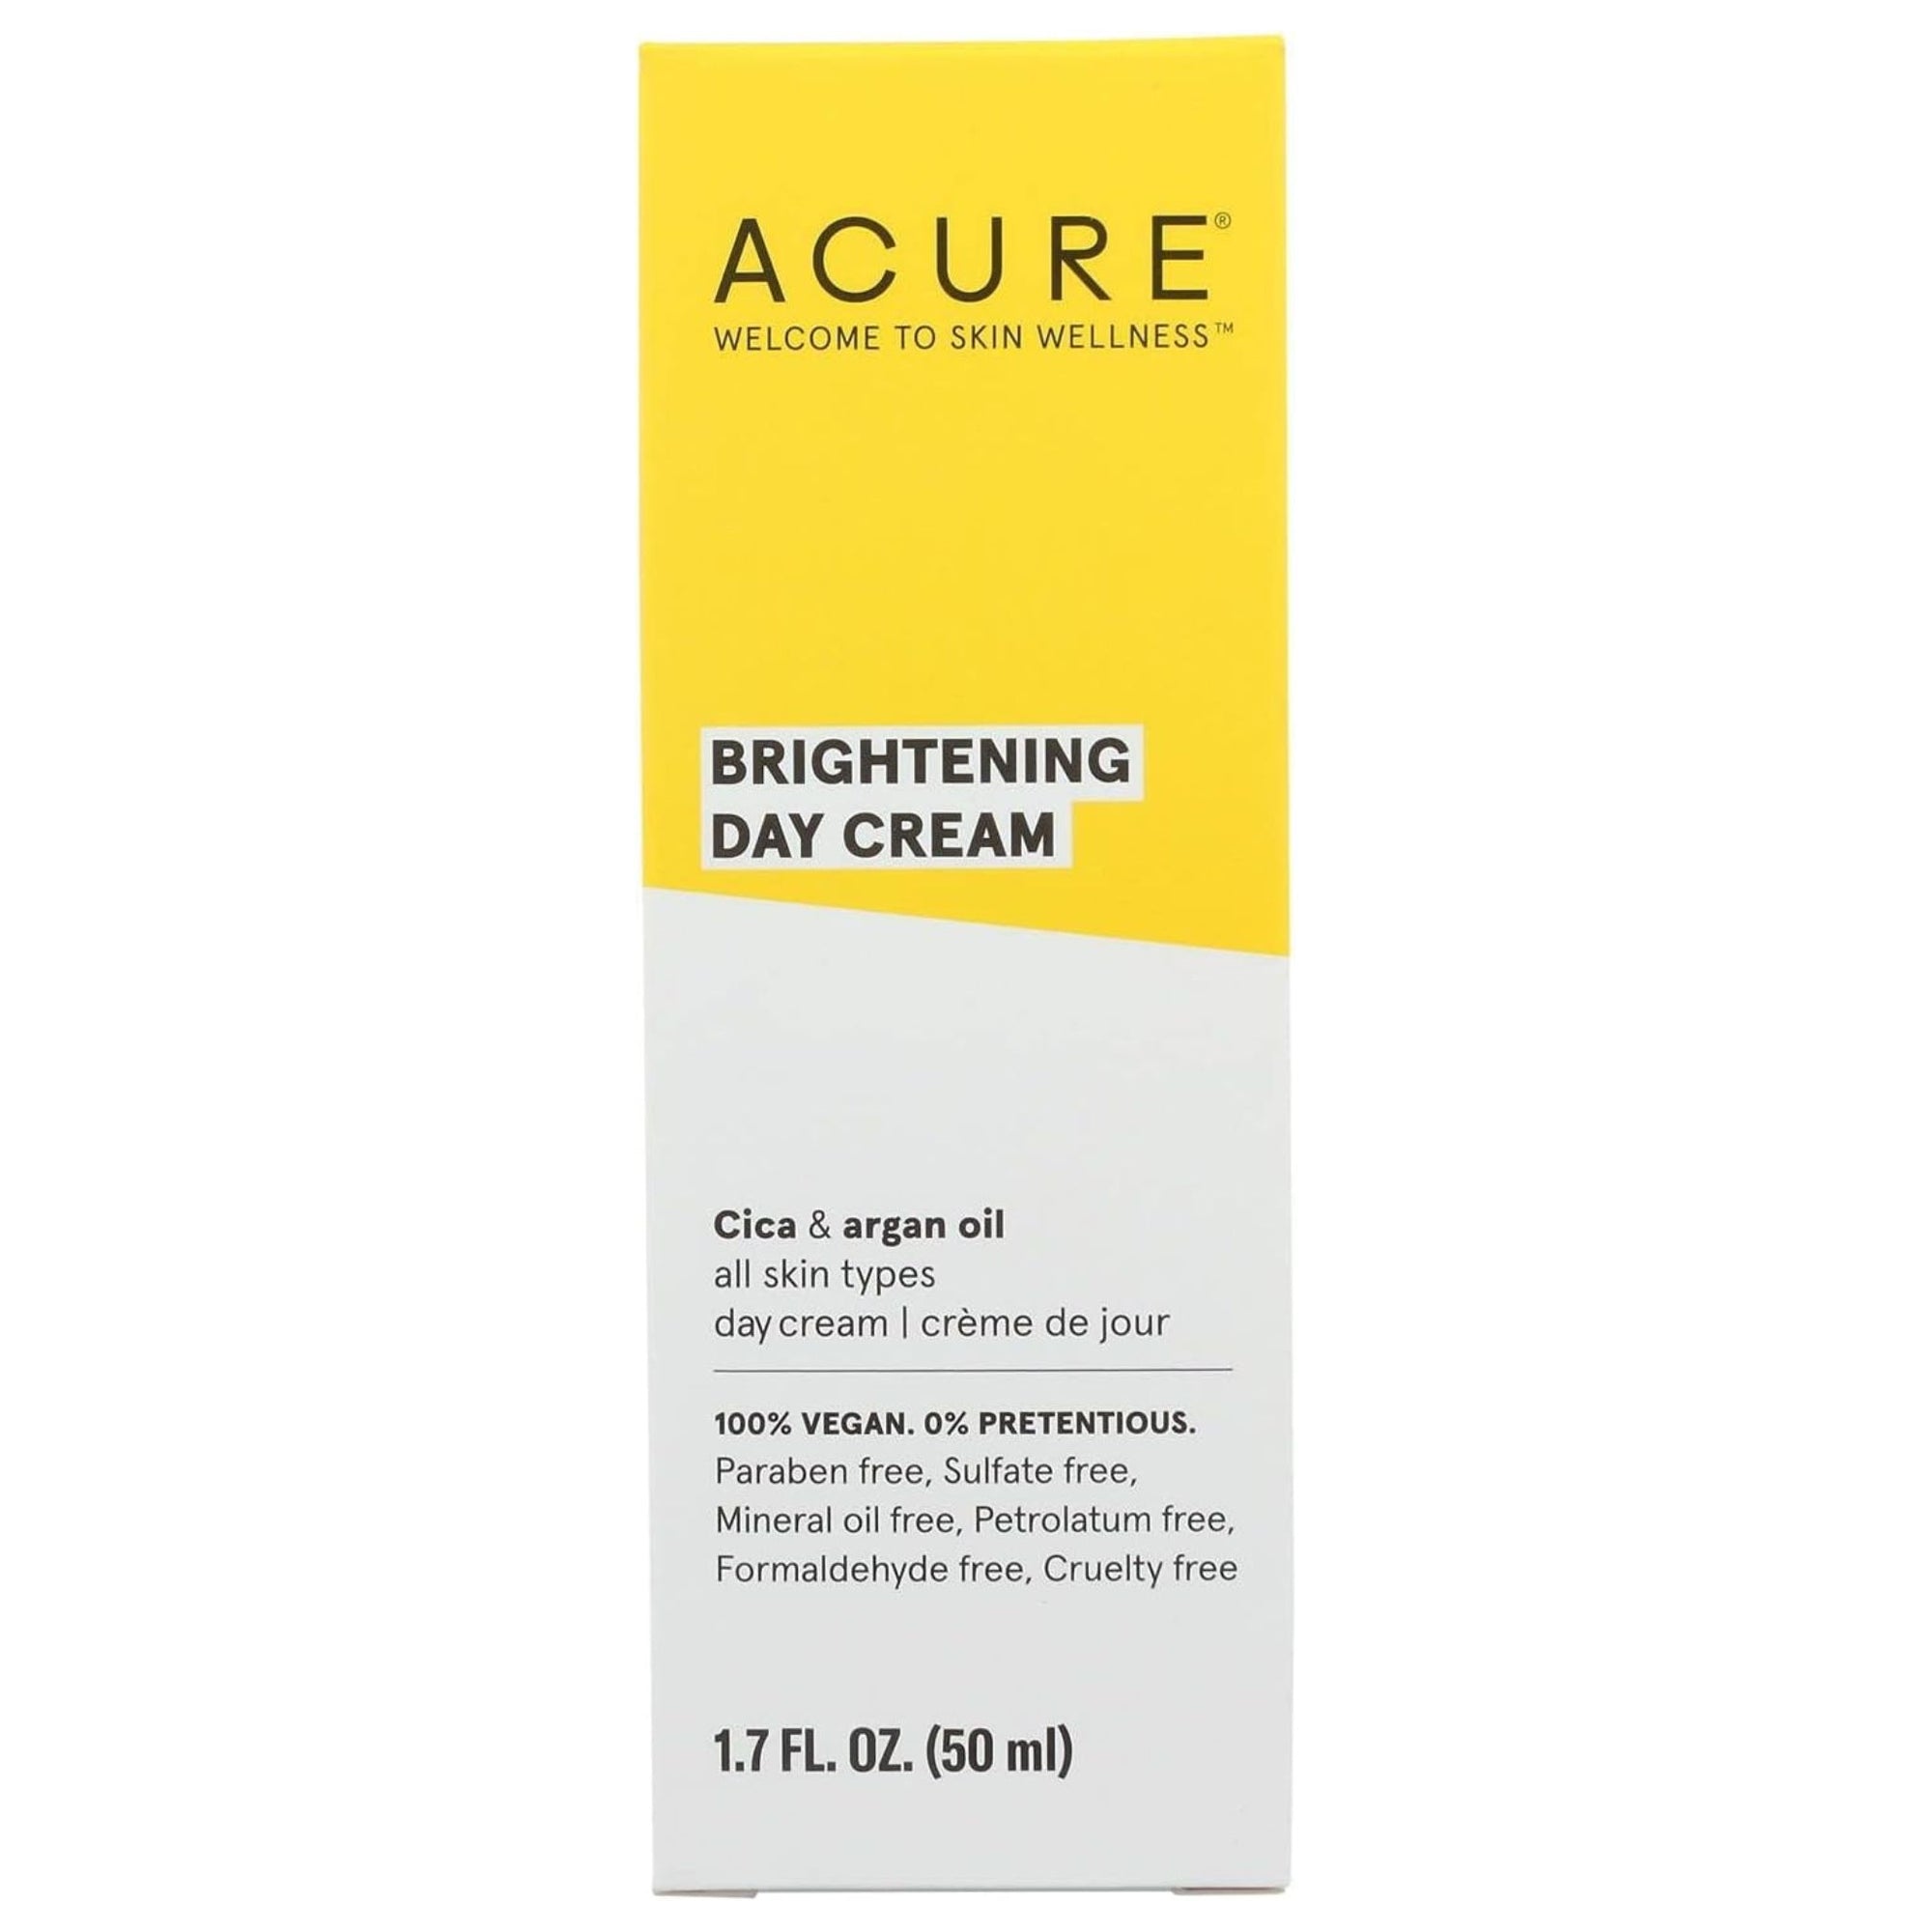 Acure Brightening Day Cream 50ml